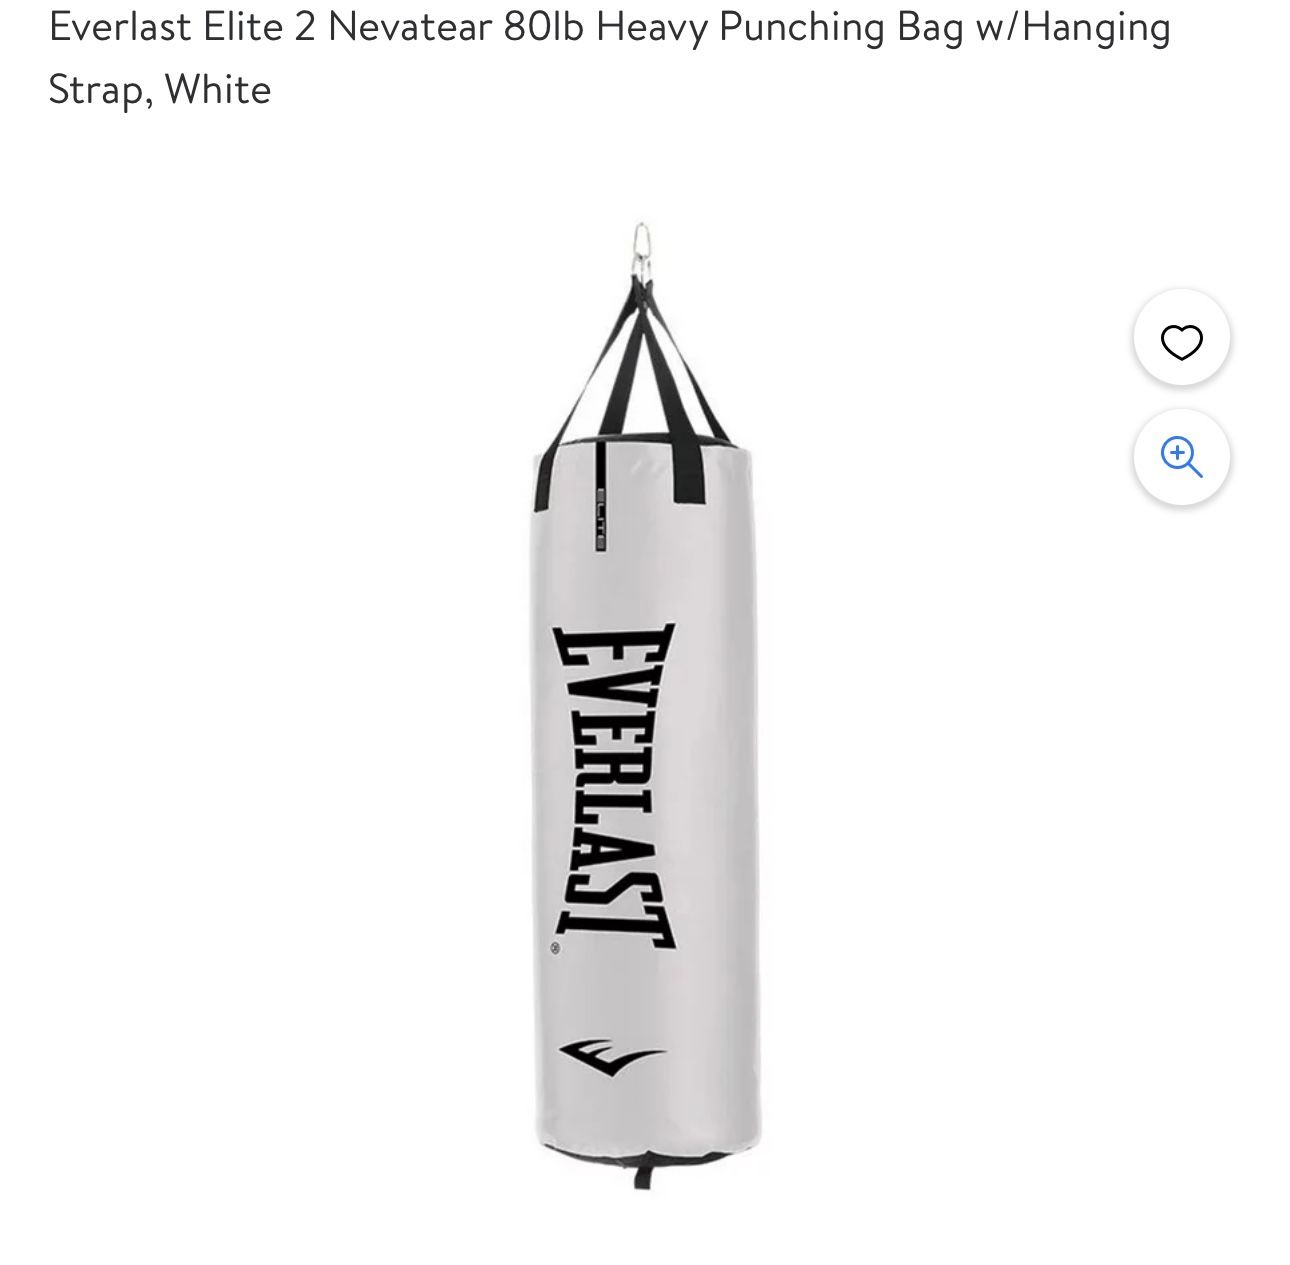 Everlast Elite 2 Nevatear 80lb Heavy Punching Bag w/Hanging Strap, White